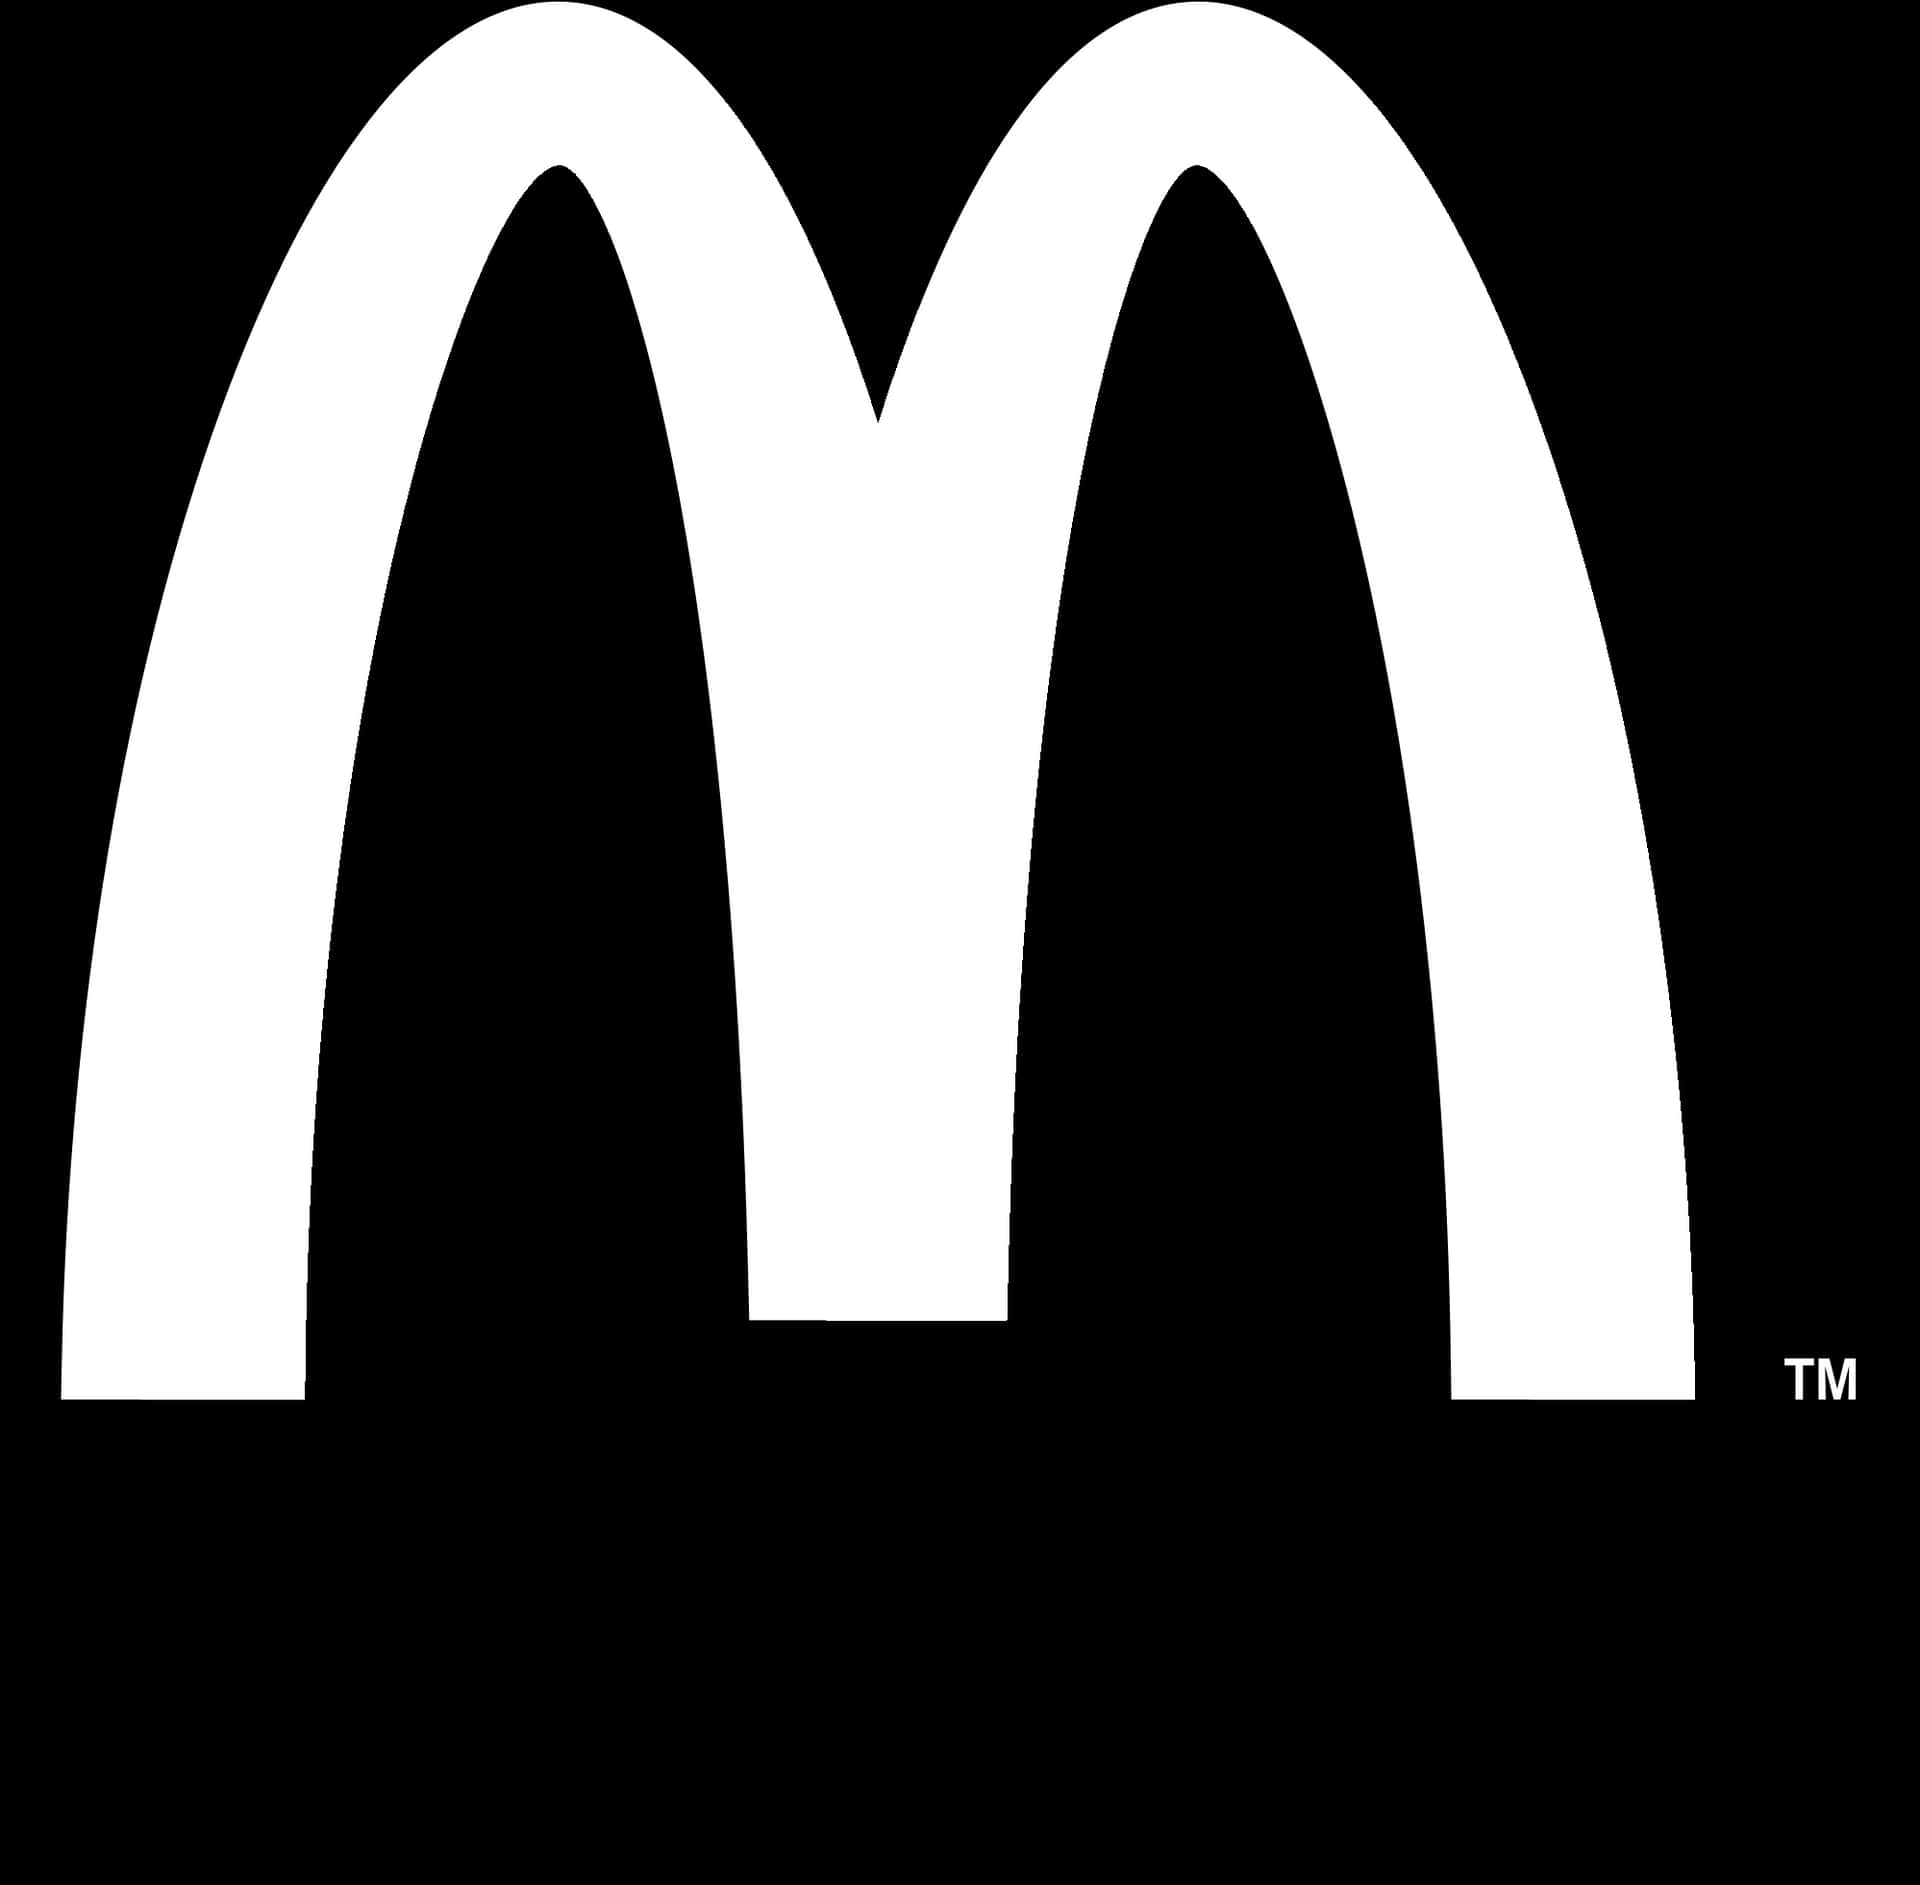 Mc Donalds Iconic Golden Arches Logo PNG image